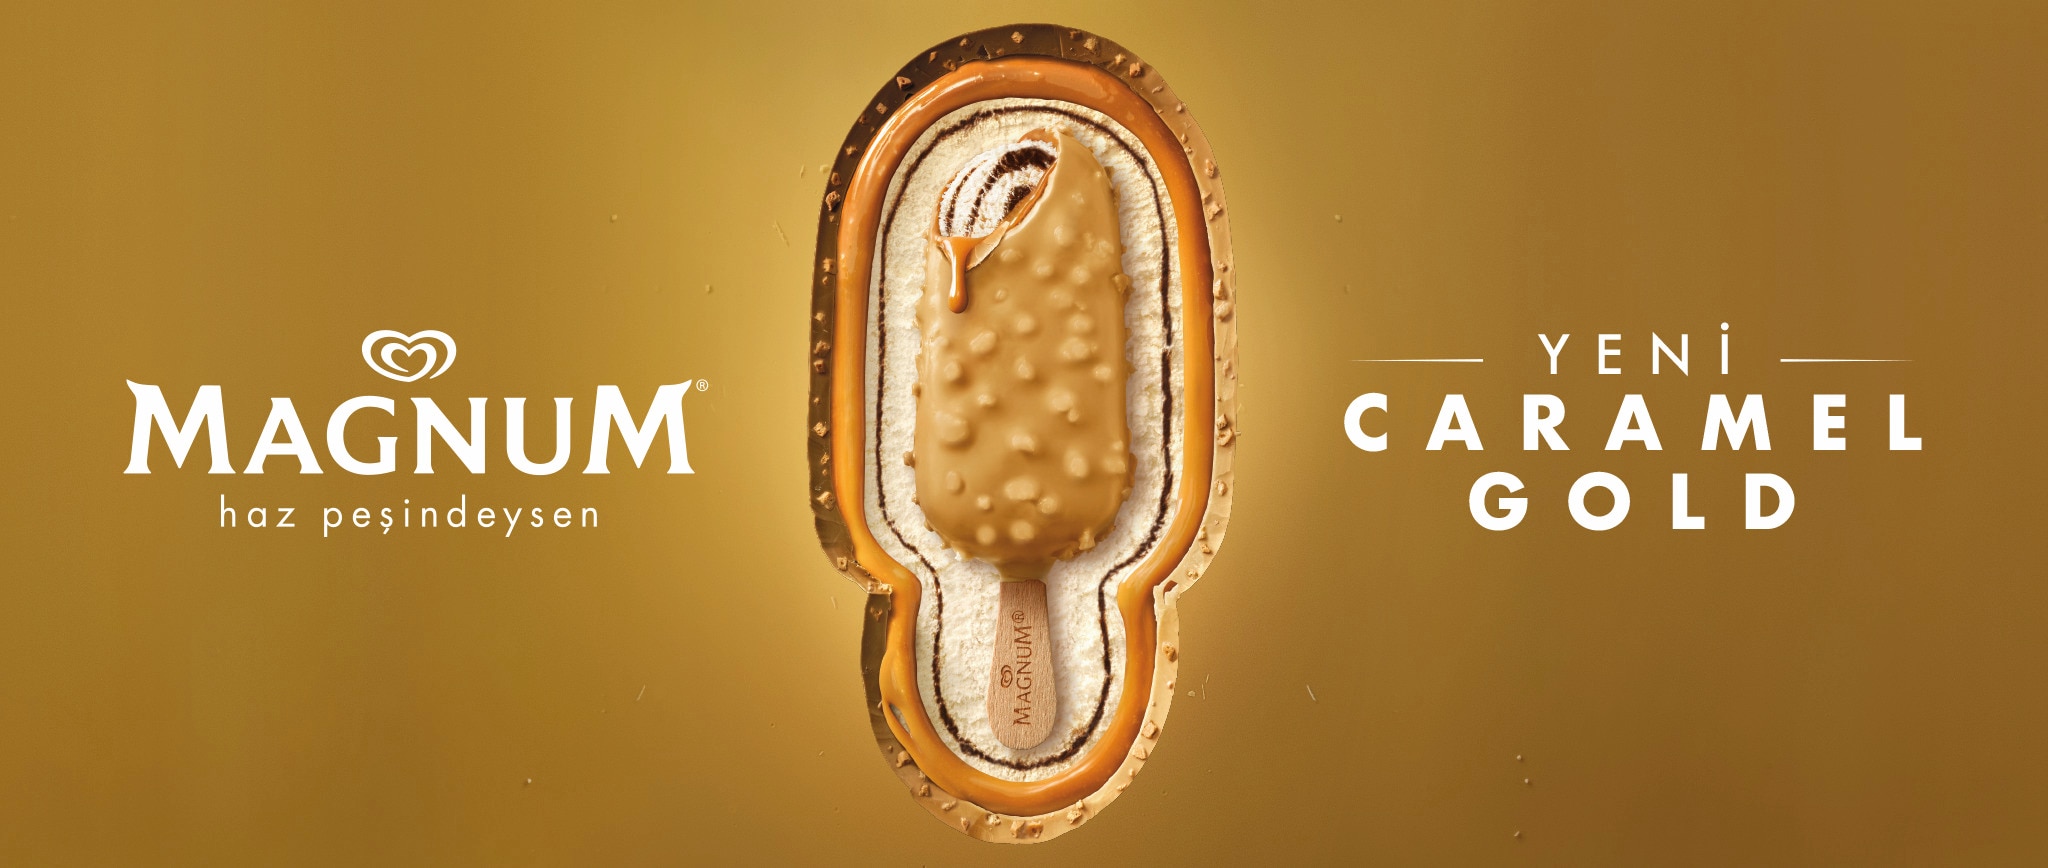 Yeni Magnum Caramel Gold